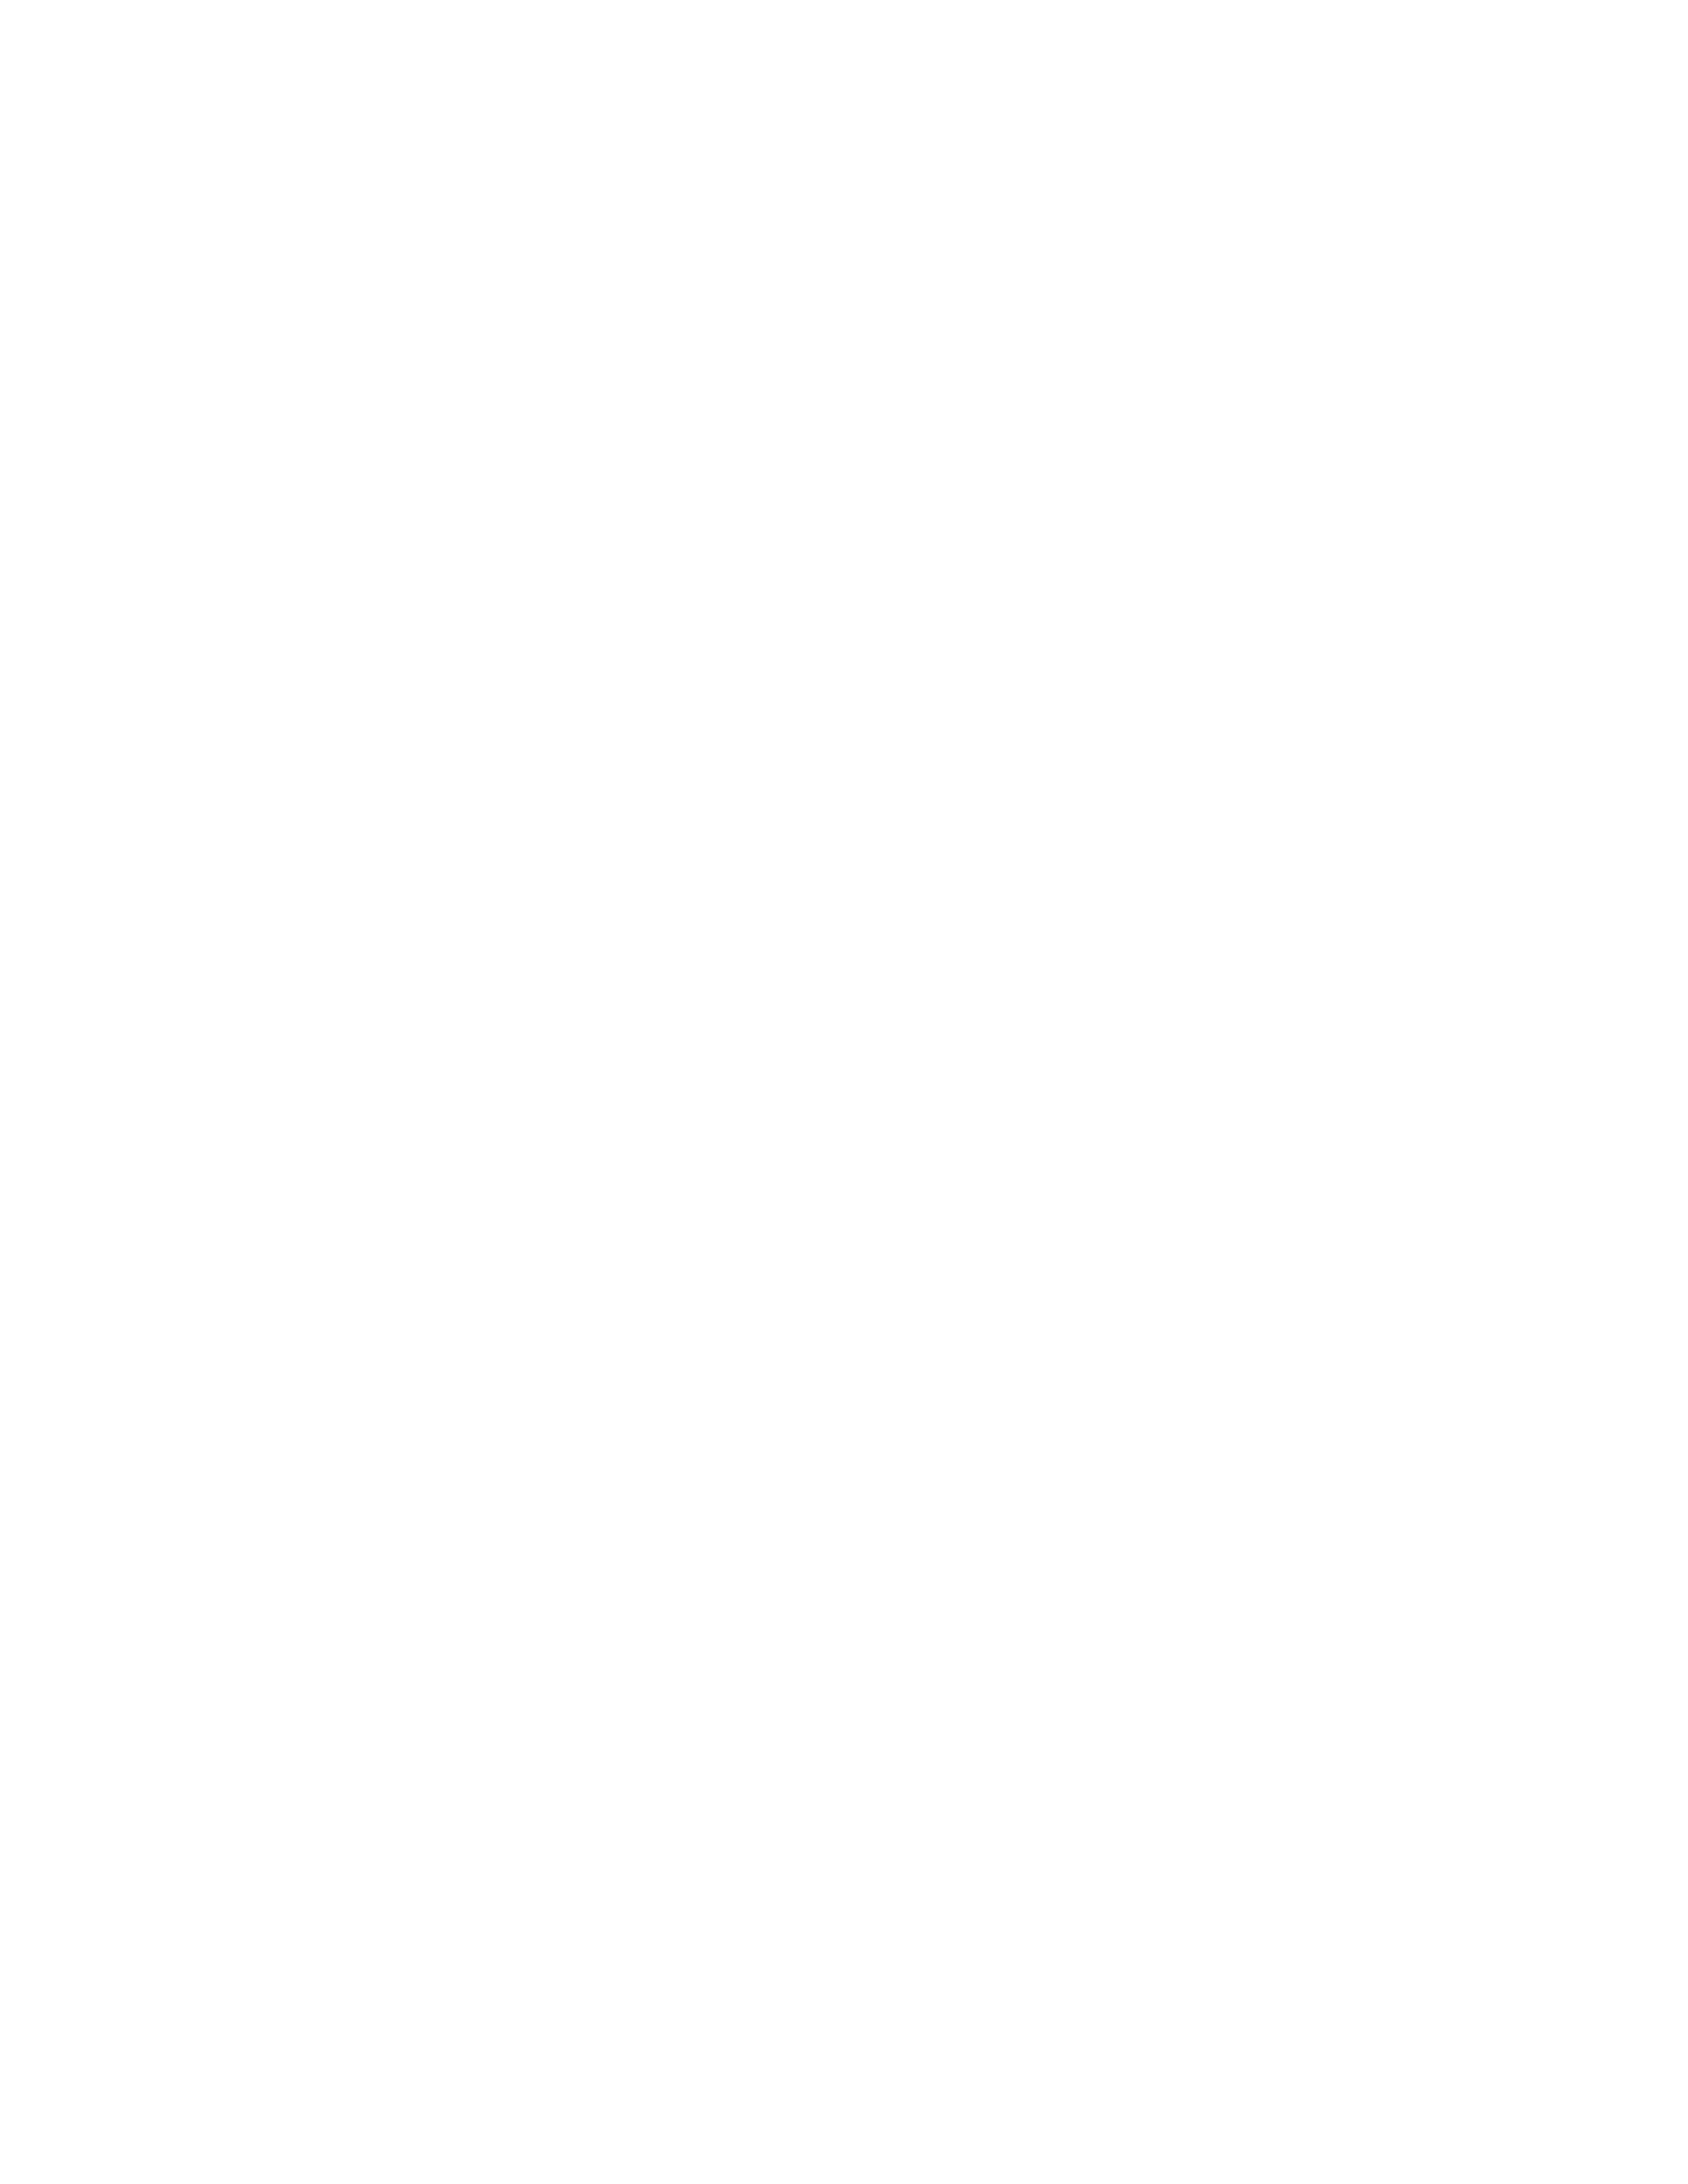 Empresa B certificada